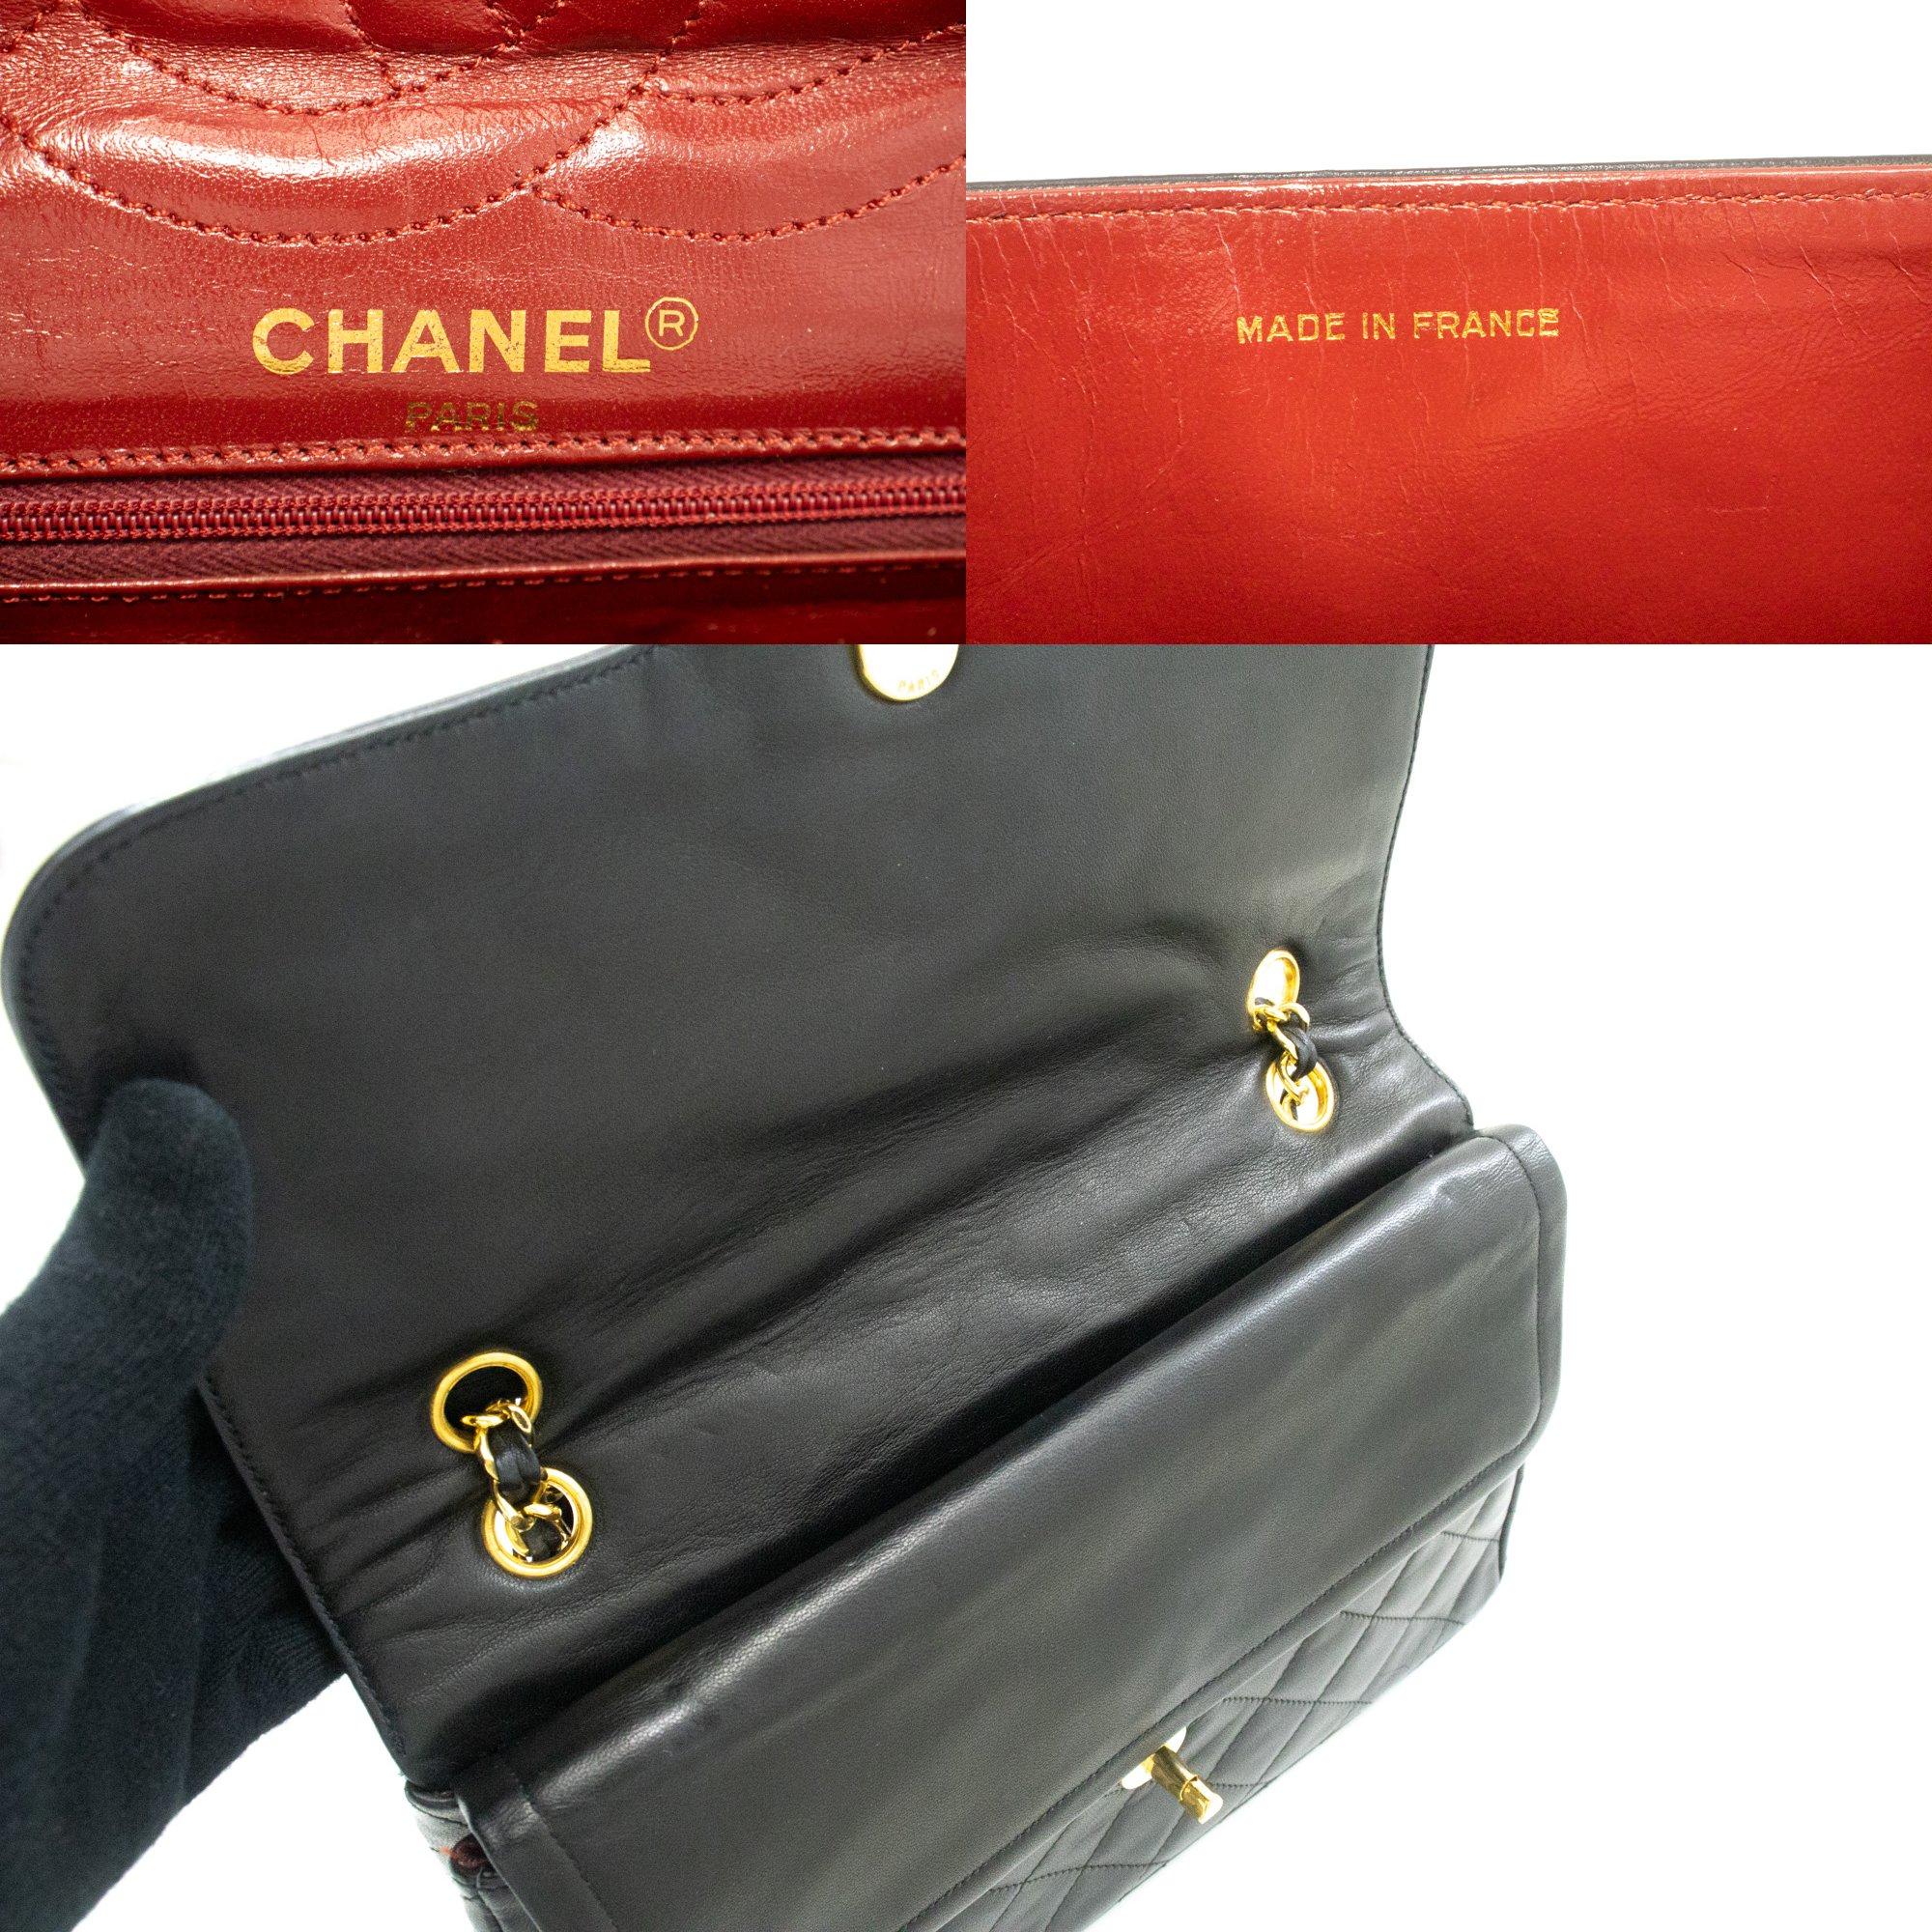 CHANEL Paris Limited Chain Shoulder Bag Black Quilted Double Flap For Sale 4